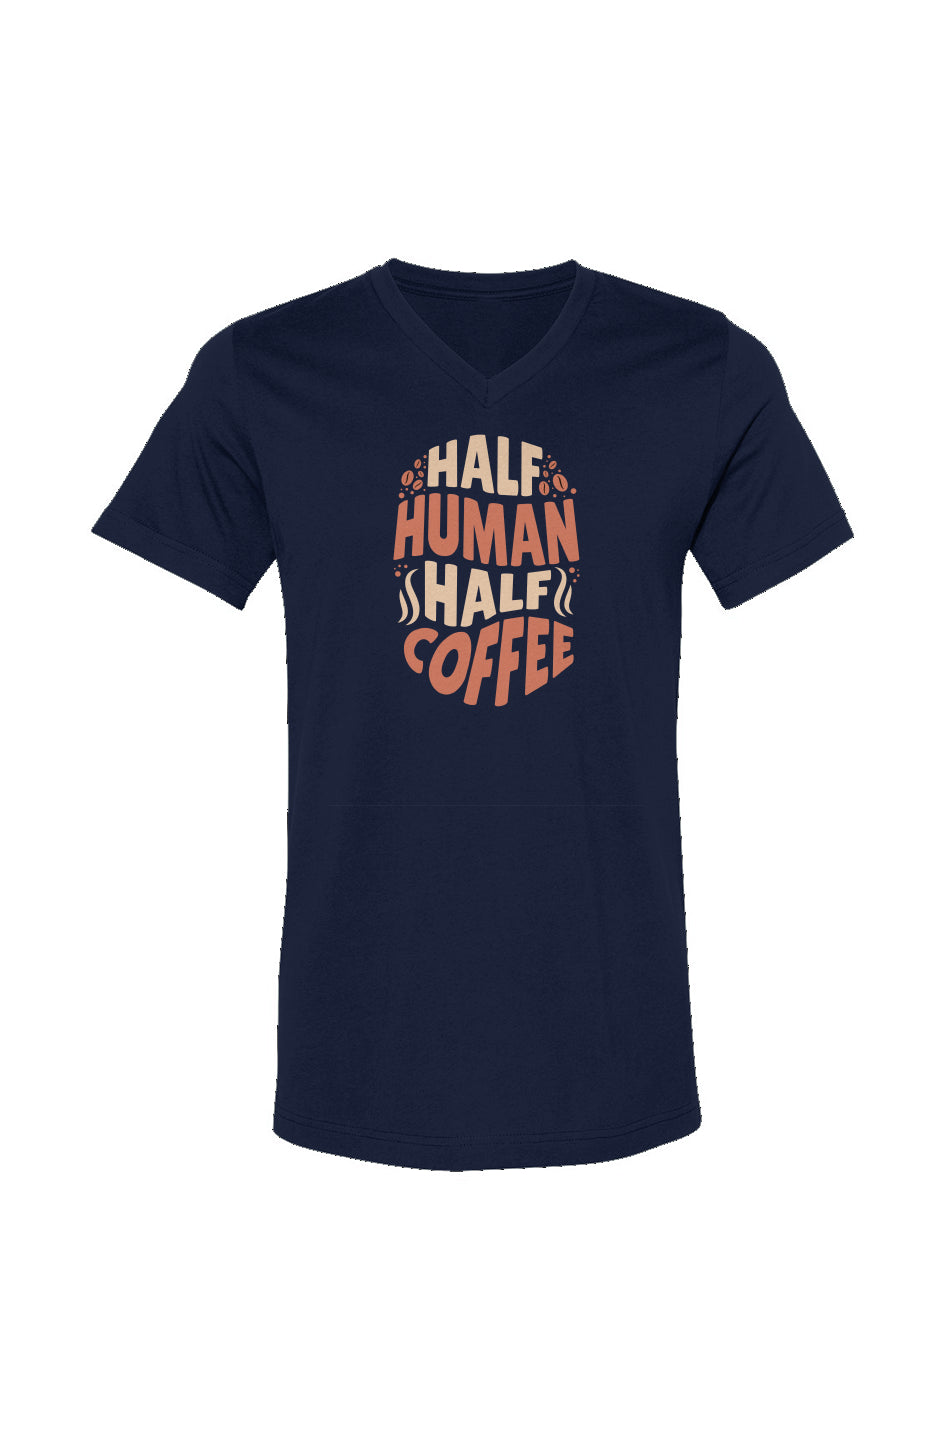 "Half Human, Half Coffee" Unisex Fit 